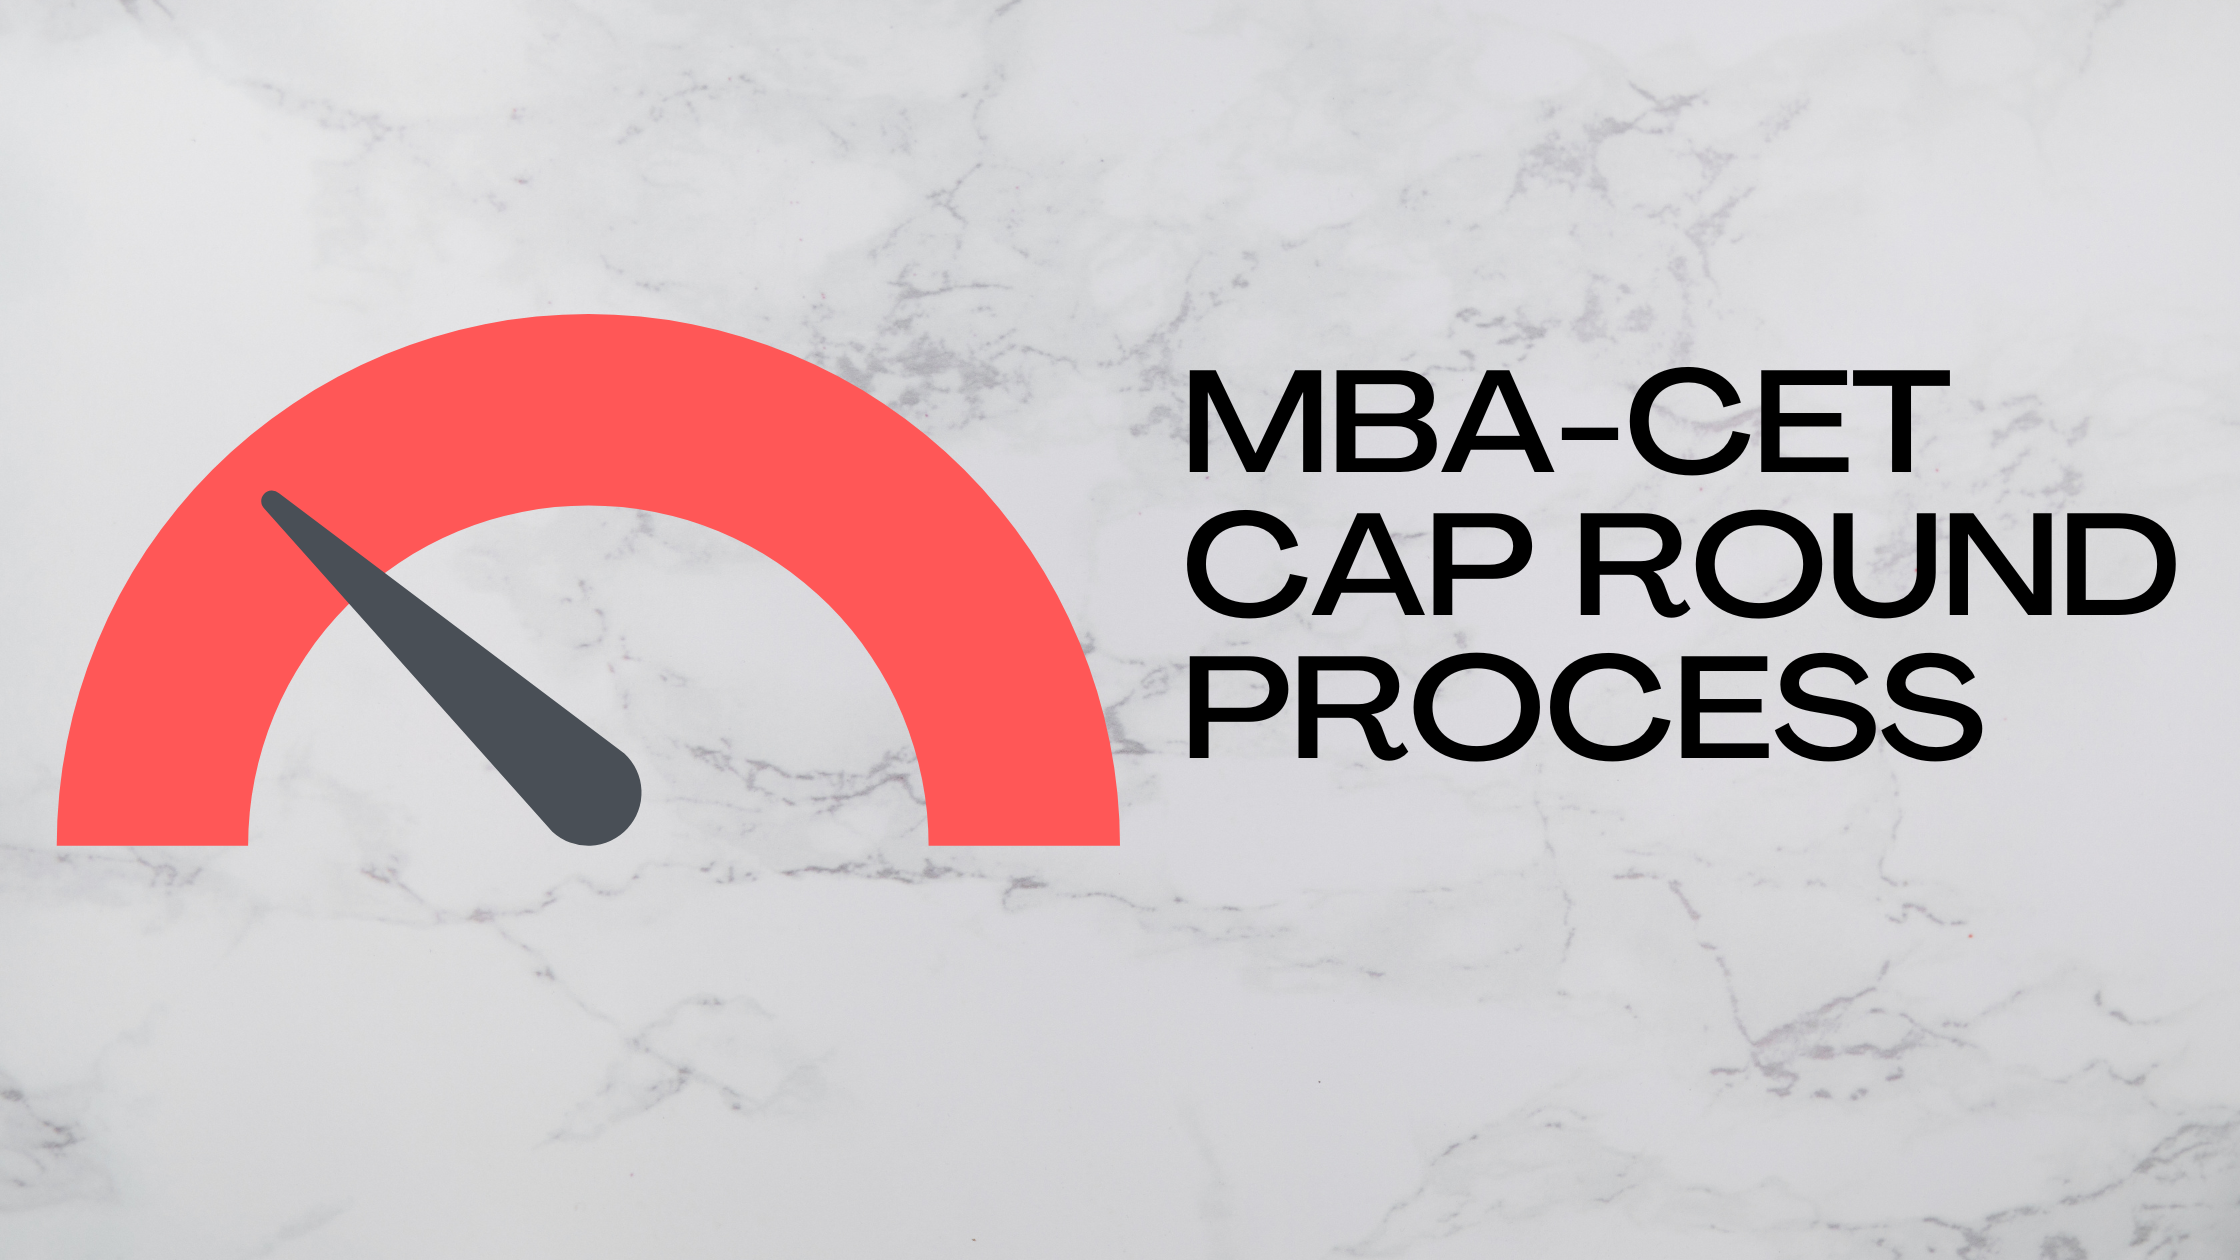 MBA-CET CAP Round Process